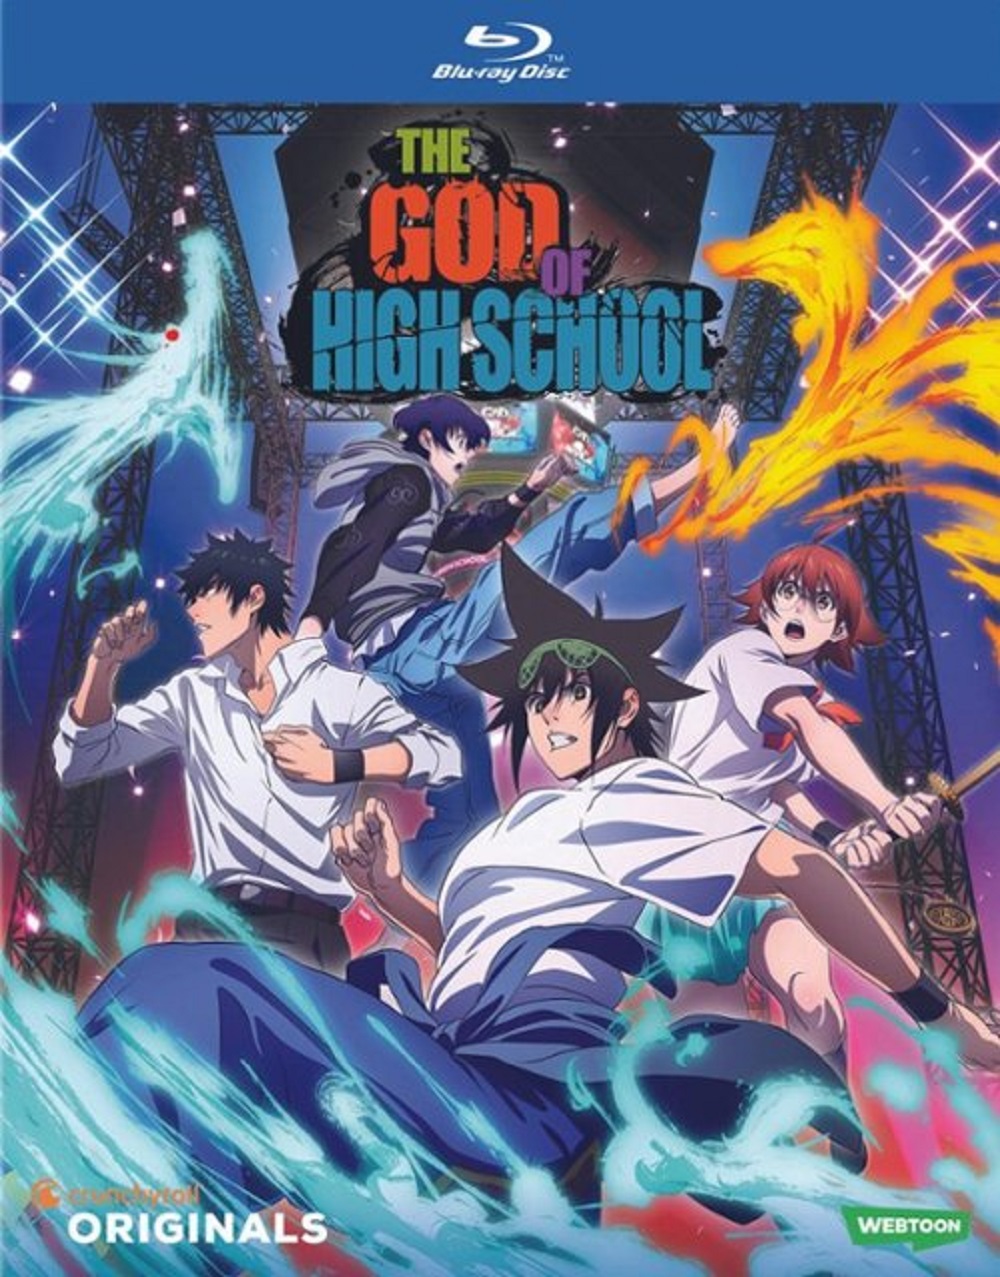 God of High School: Season 1 (Blu-ray) 